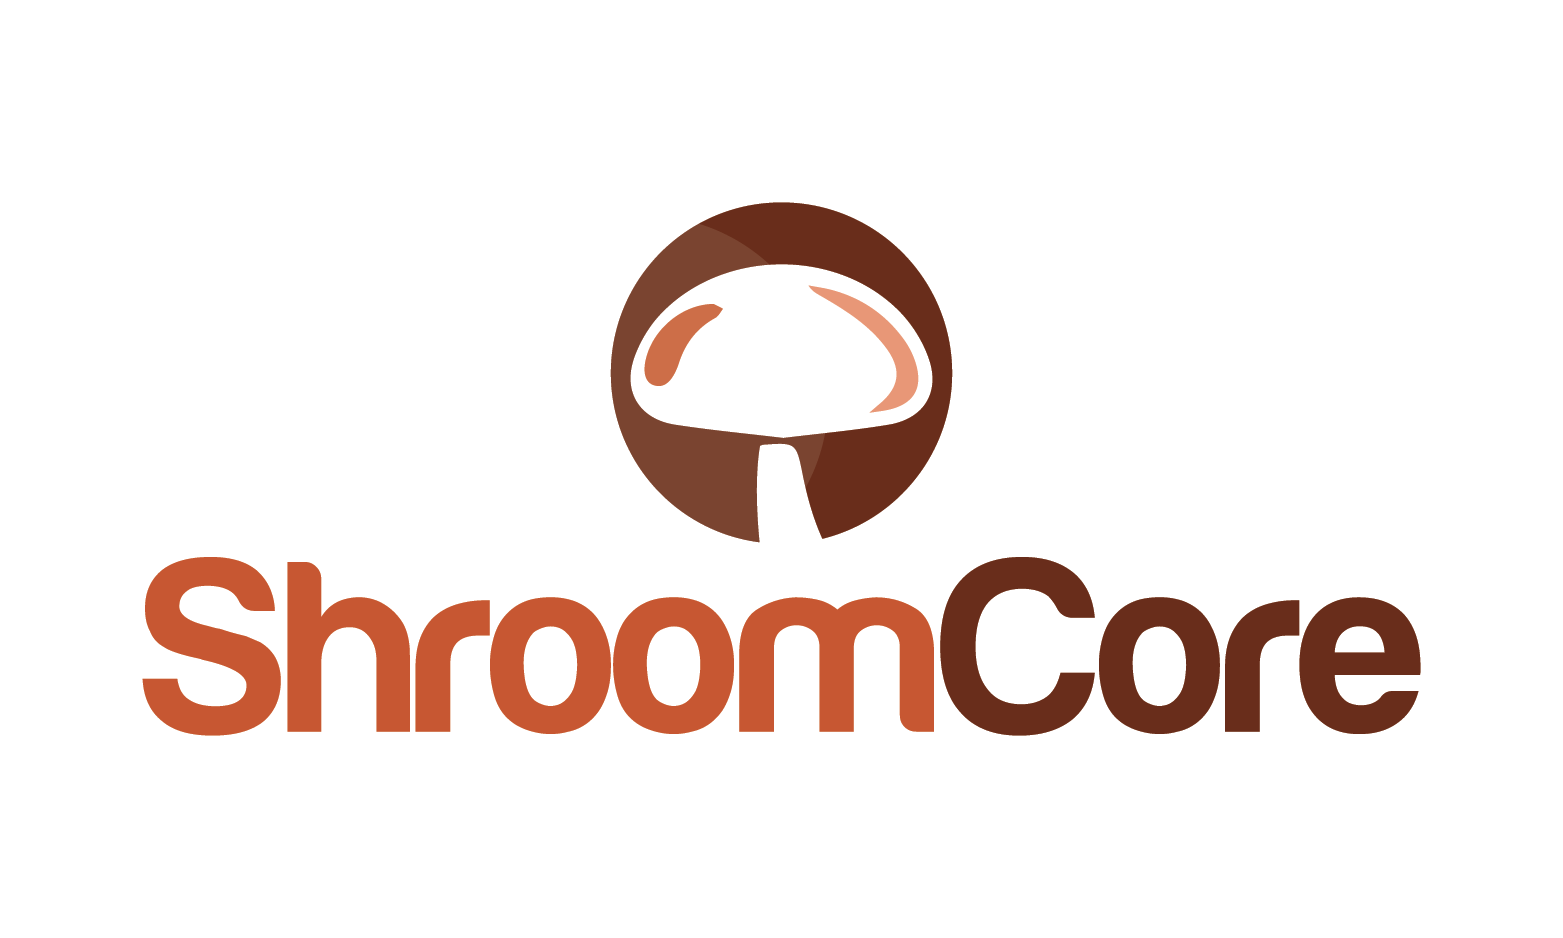 ShroomCore.com - Creative brandable domain for sale